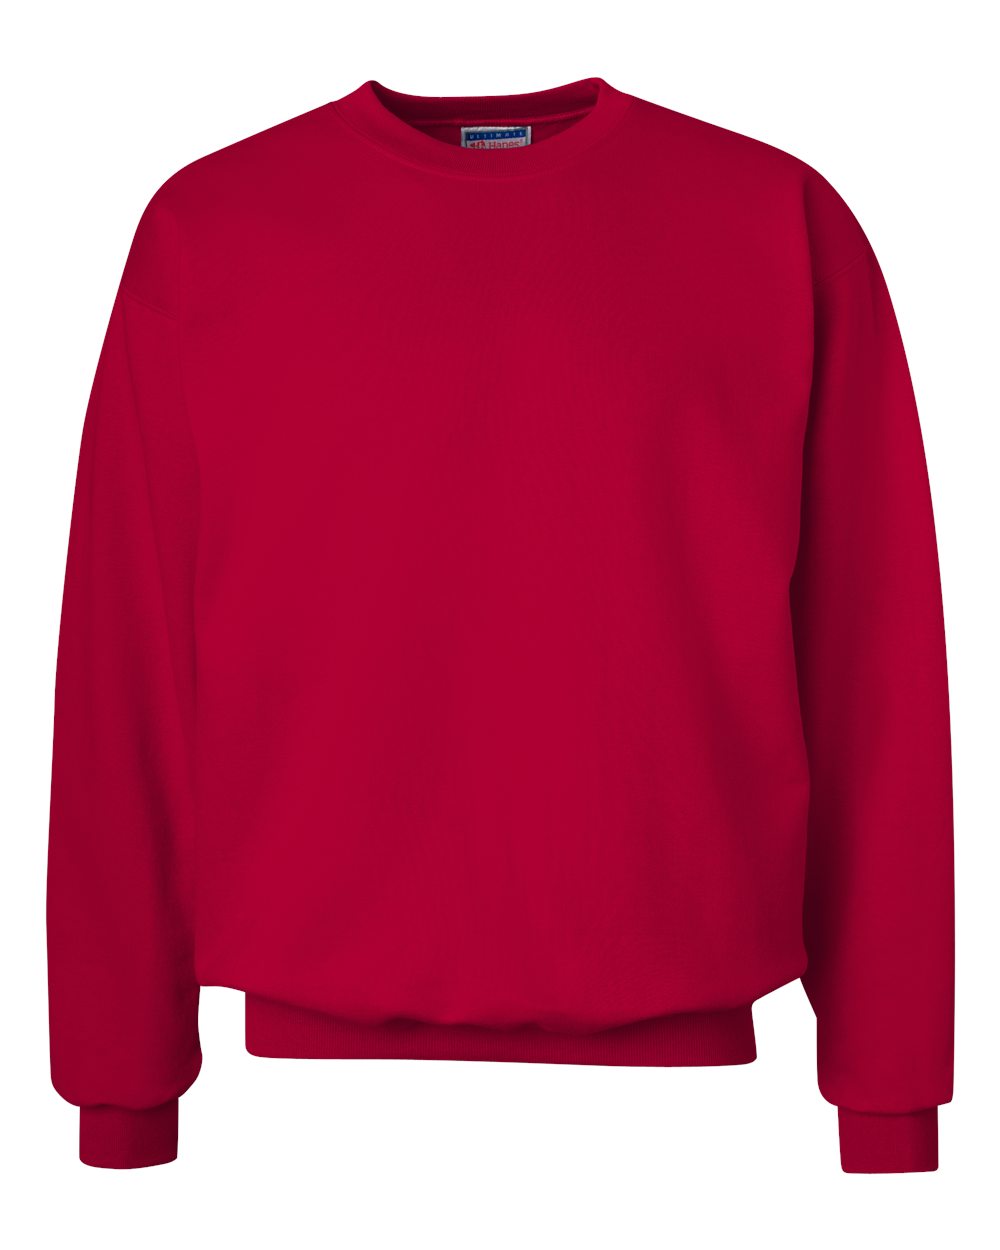 Hanes Mens Blank Ultimate Cotton Crewneck Sweatshirt F260 up to 3XL | eBay